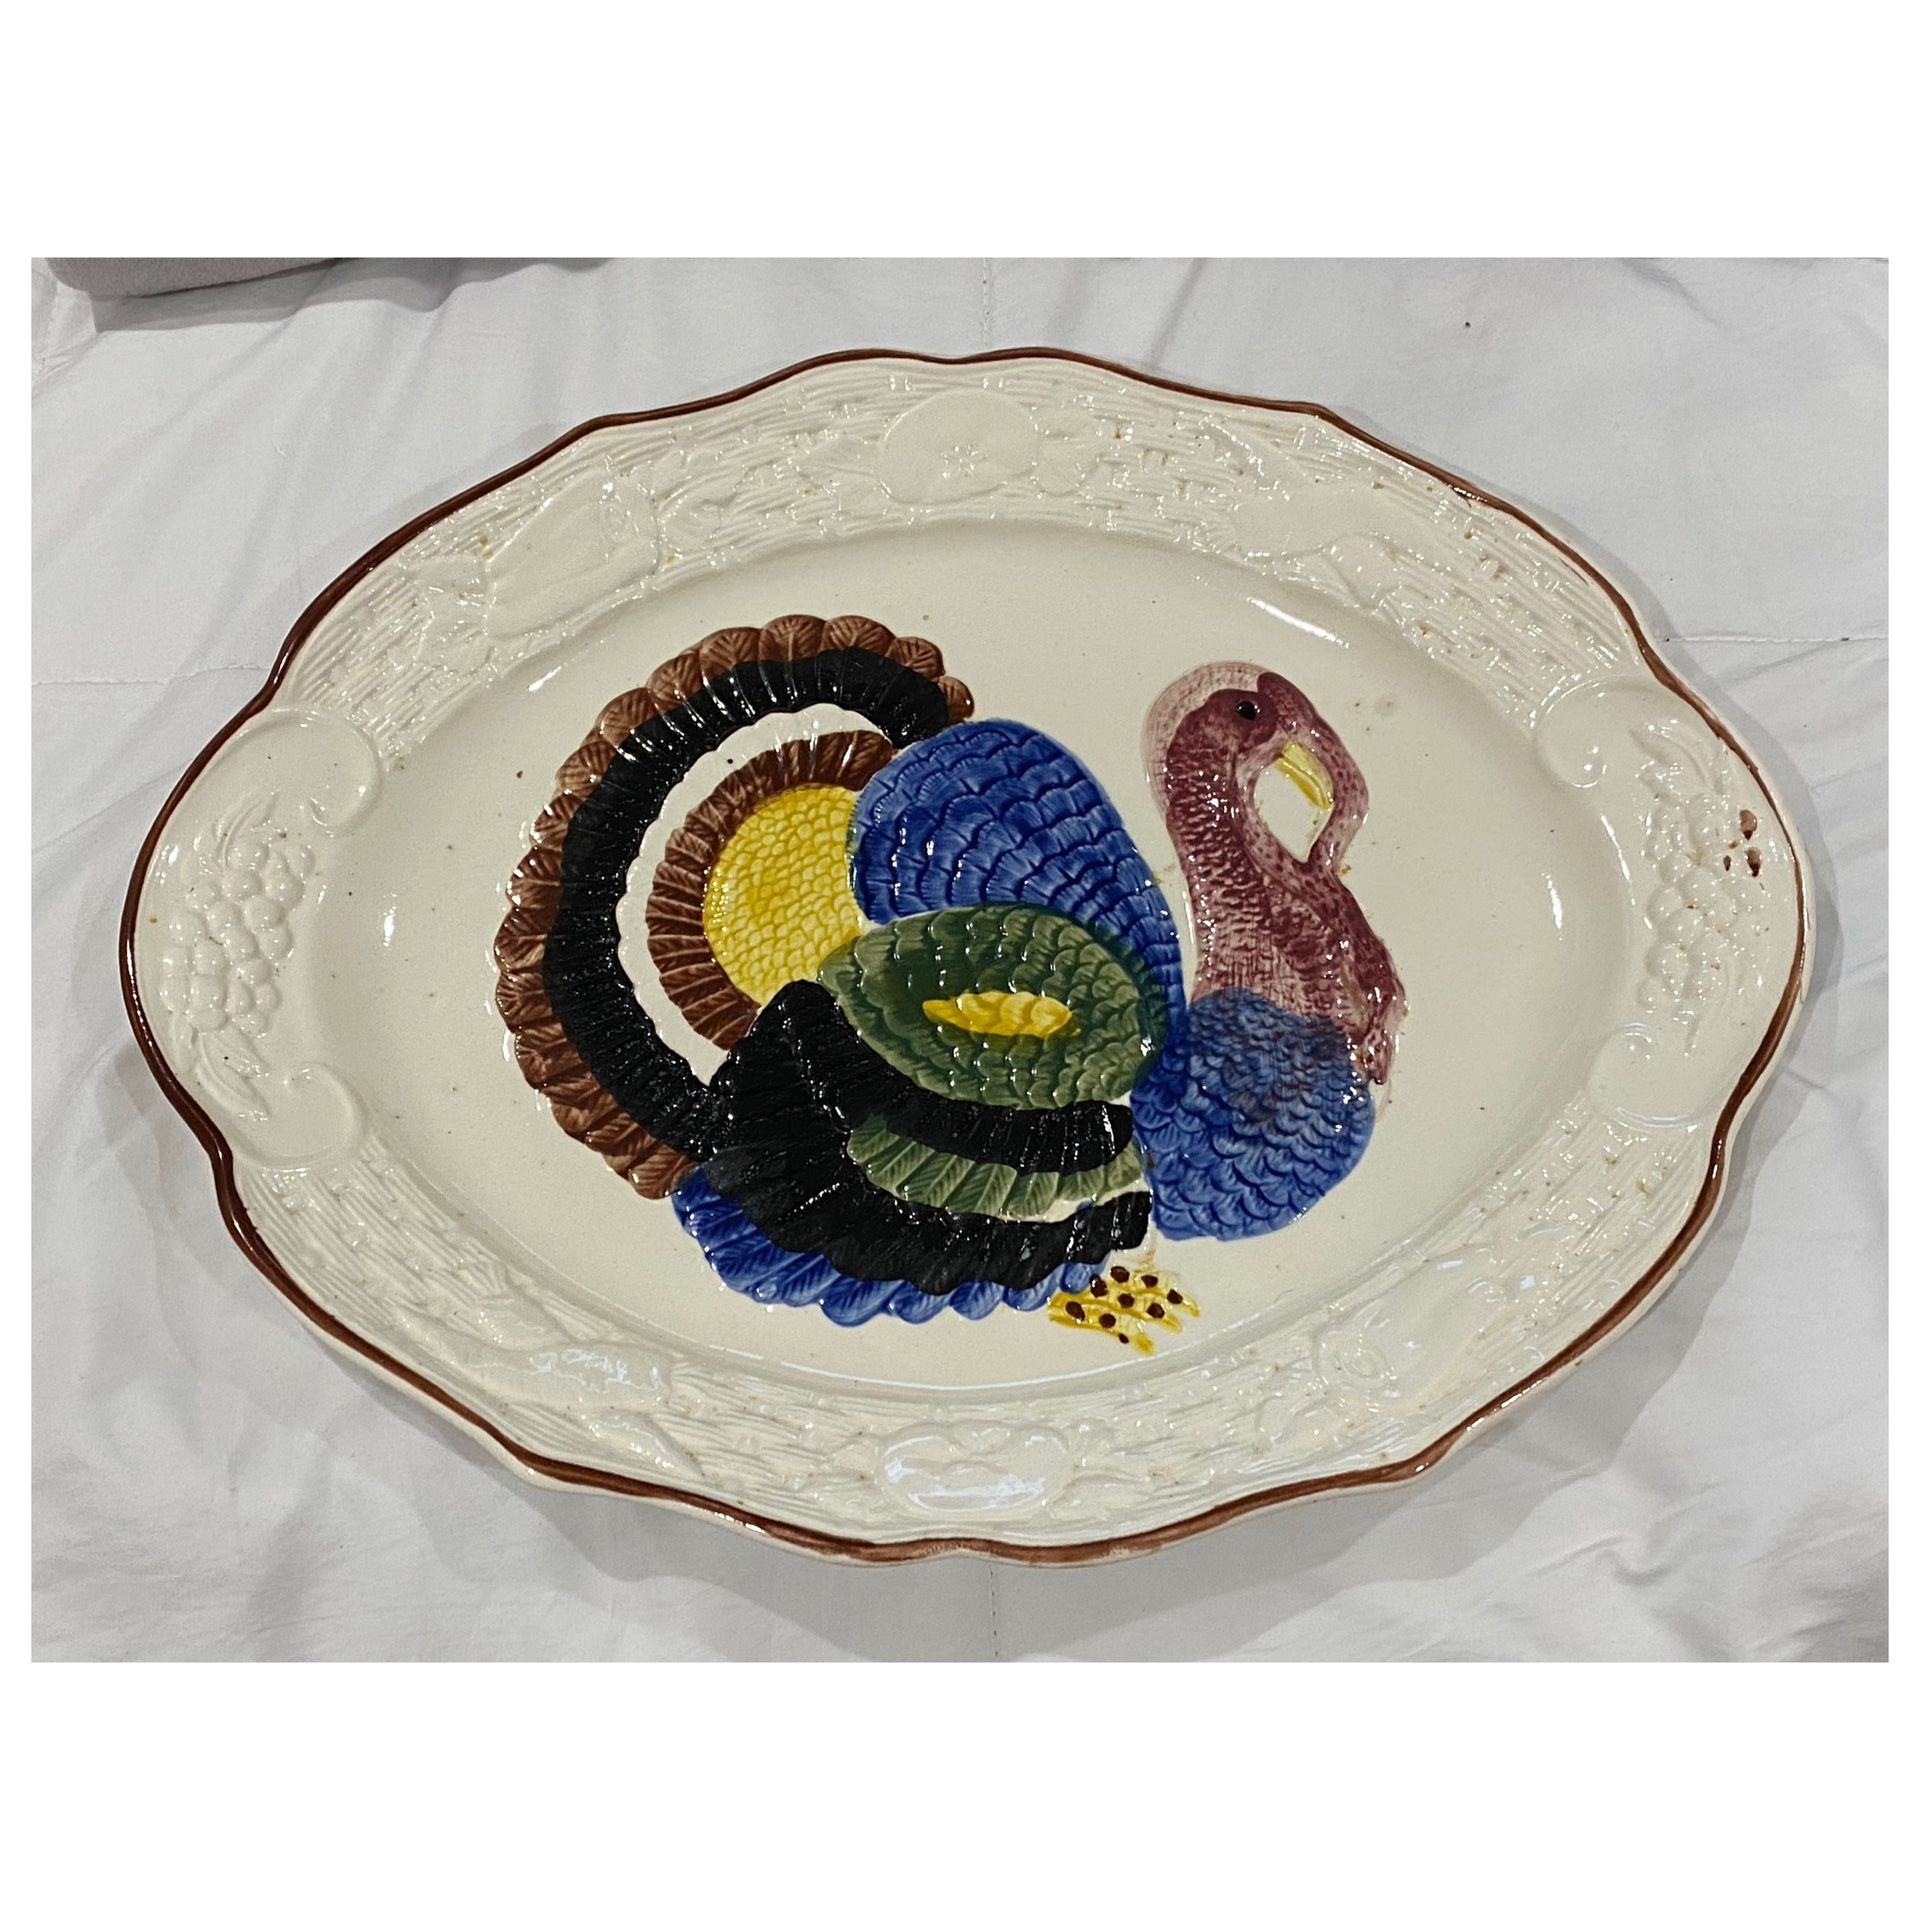 Vintage Majolica Hand Painted Ceramic Turkey Serving Tray or Platter - Motif Thanksgiving